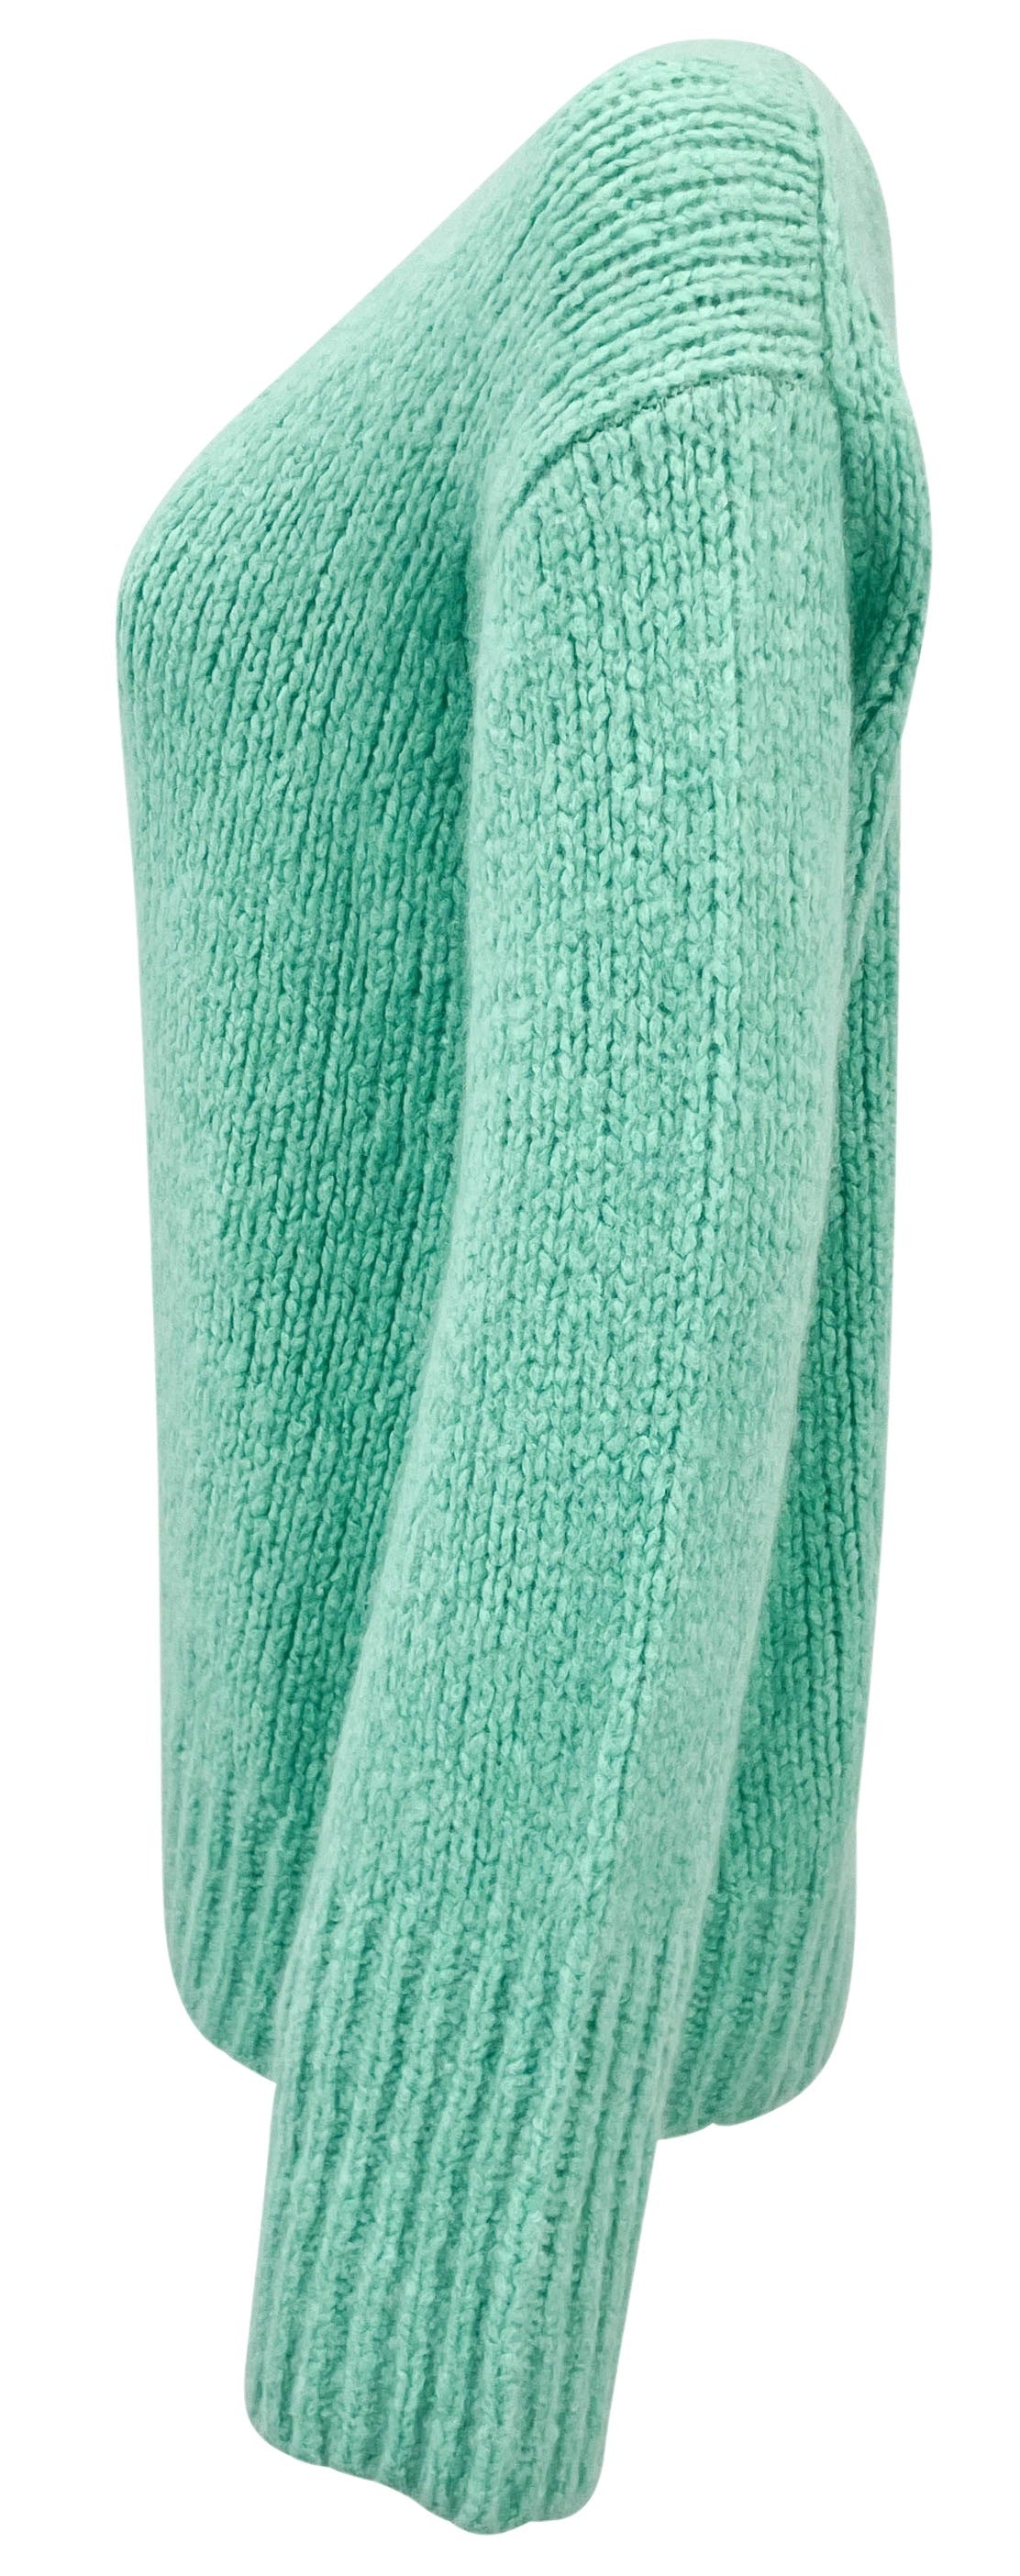 Dorothee Schumacher Cashmere Silk Sweater in Tender Green - Discounts on Dorothee Schumacher at UAL